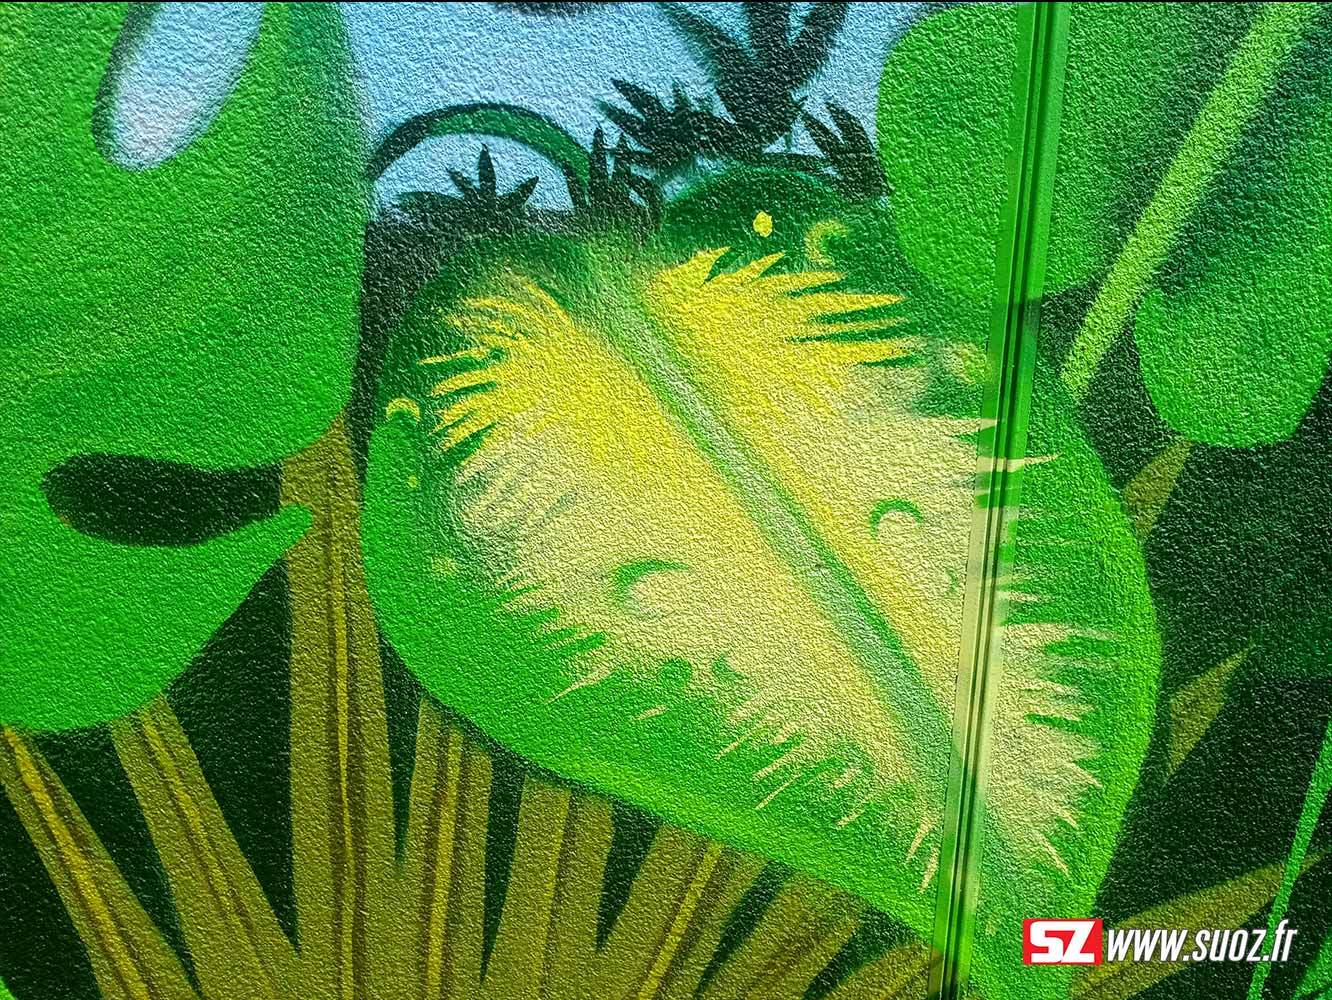 Decoration-Graffiti-Jungle-feuille-Suoz-graffeur-professionnel-peinture-foret-tropicale